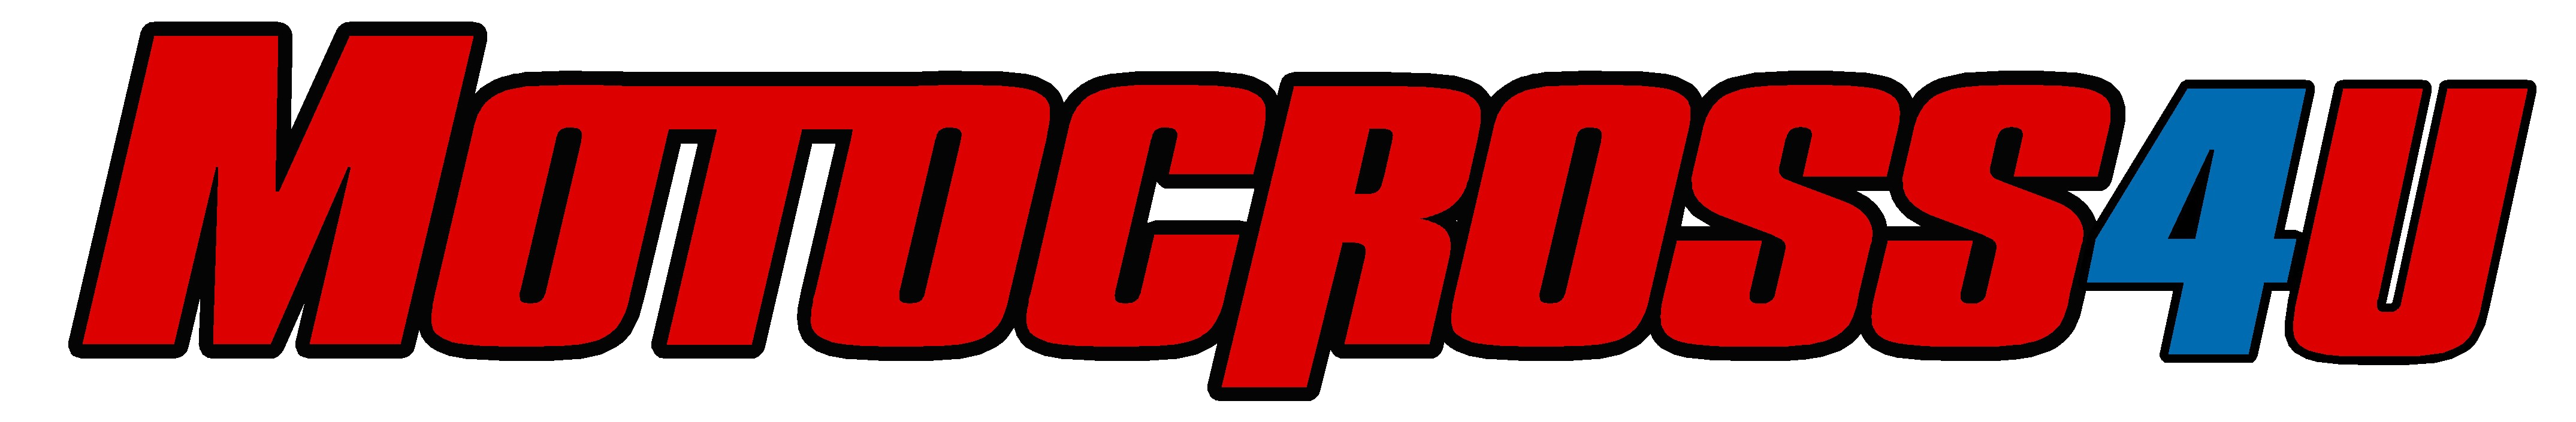 motocross4u online shop logo